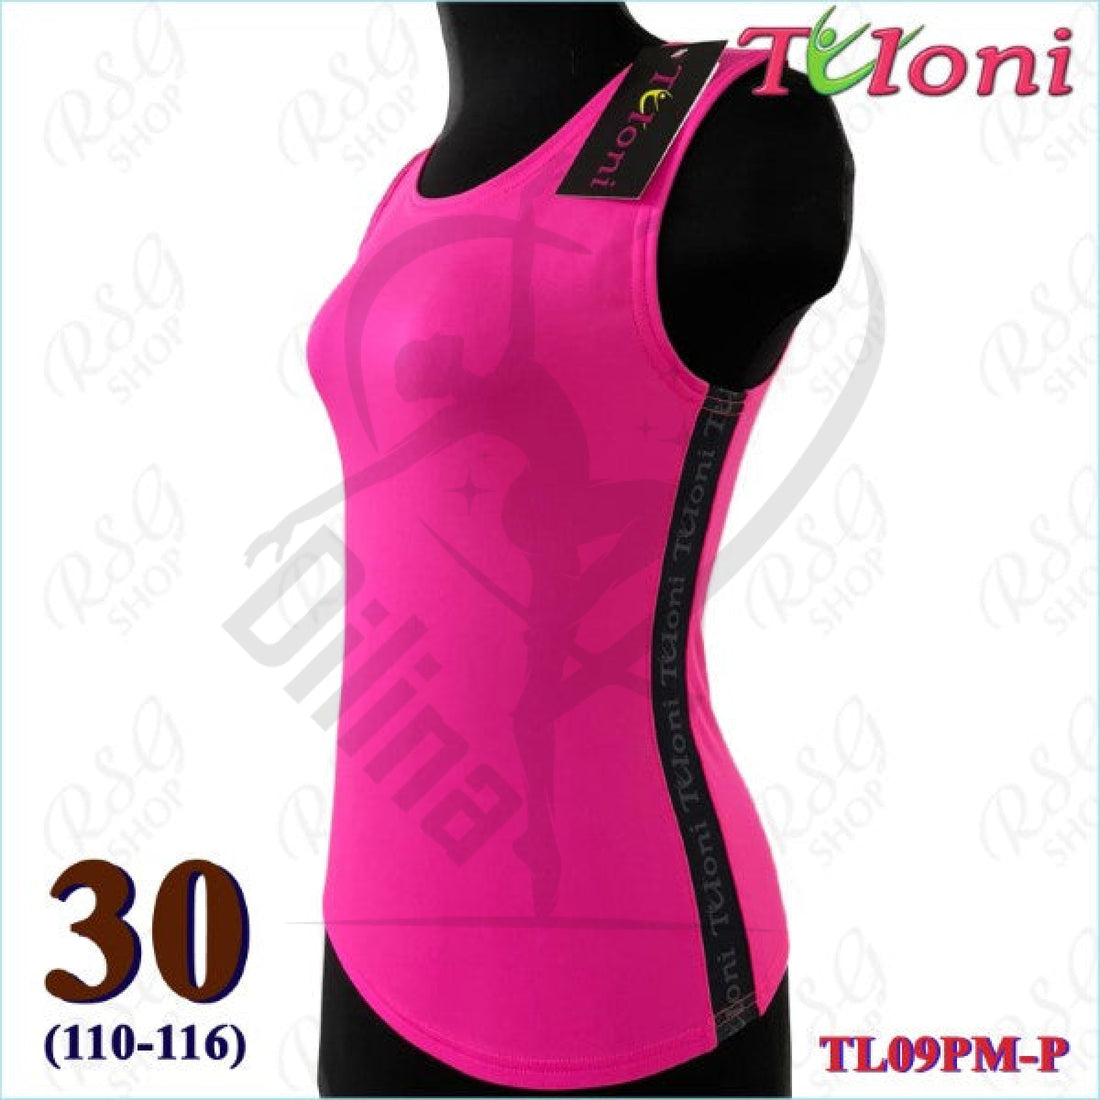 Tuloni Long Mesh Tank Top Pink 30 (110-116) T Shirts & Tops